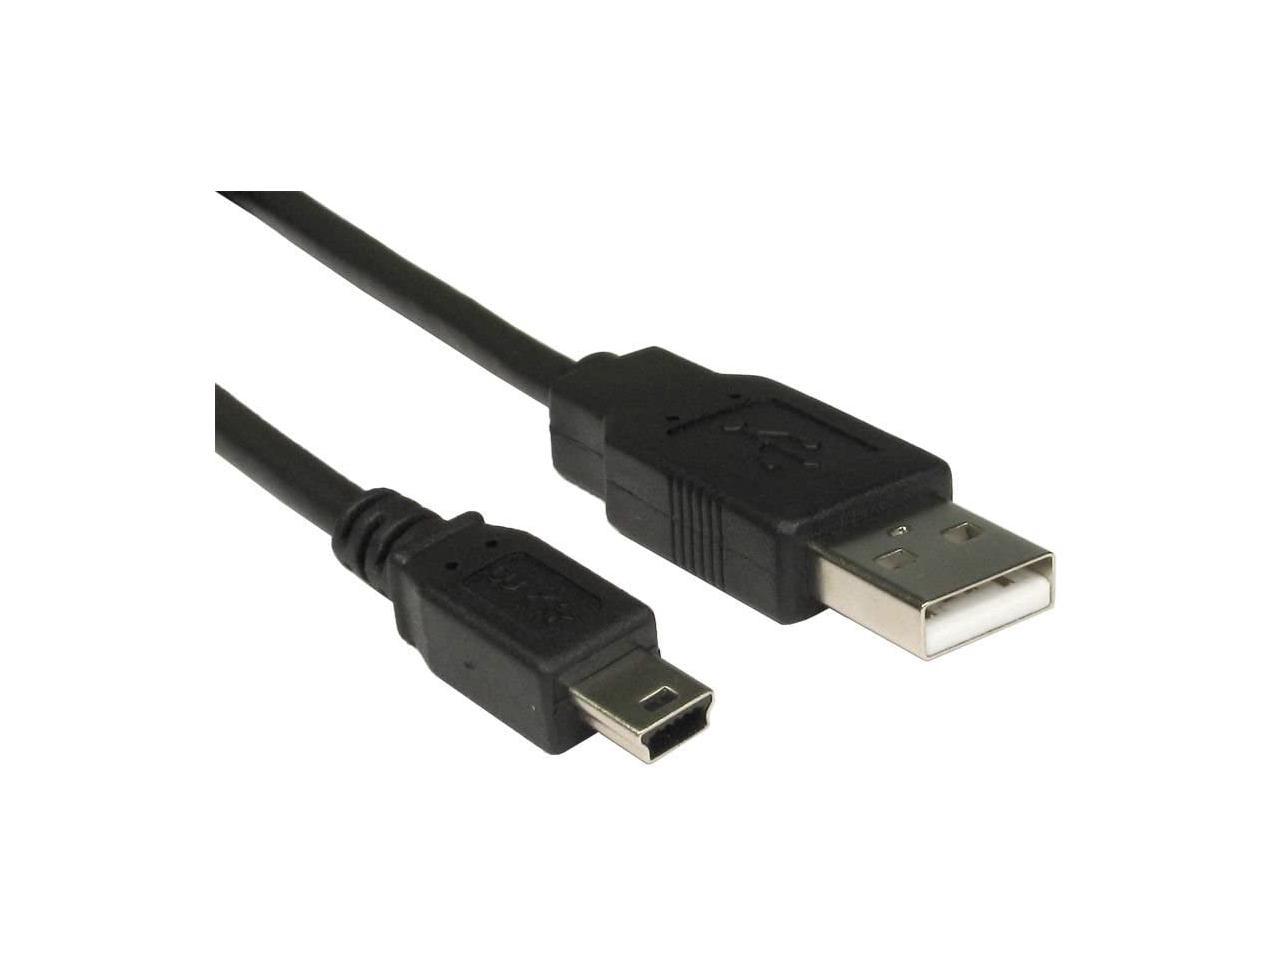 62S USB Charger Power Cable Data Lead Garmin SAT NAV 60CS 62 60CX 60CSX 